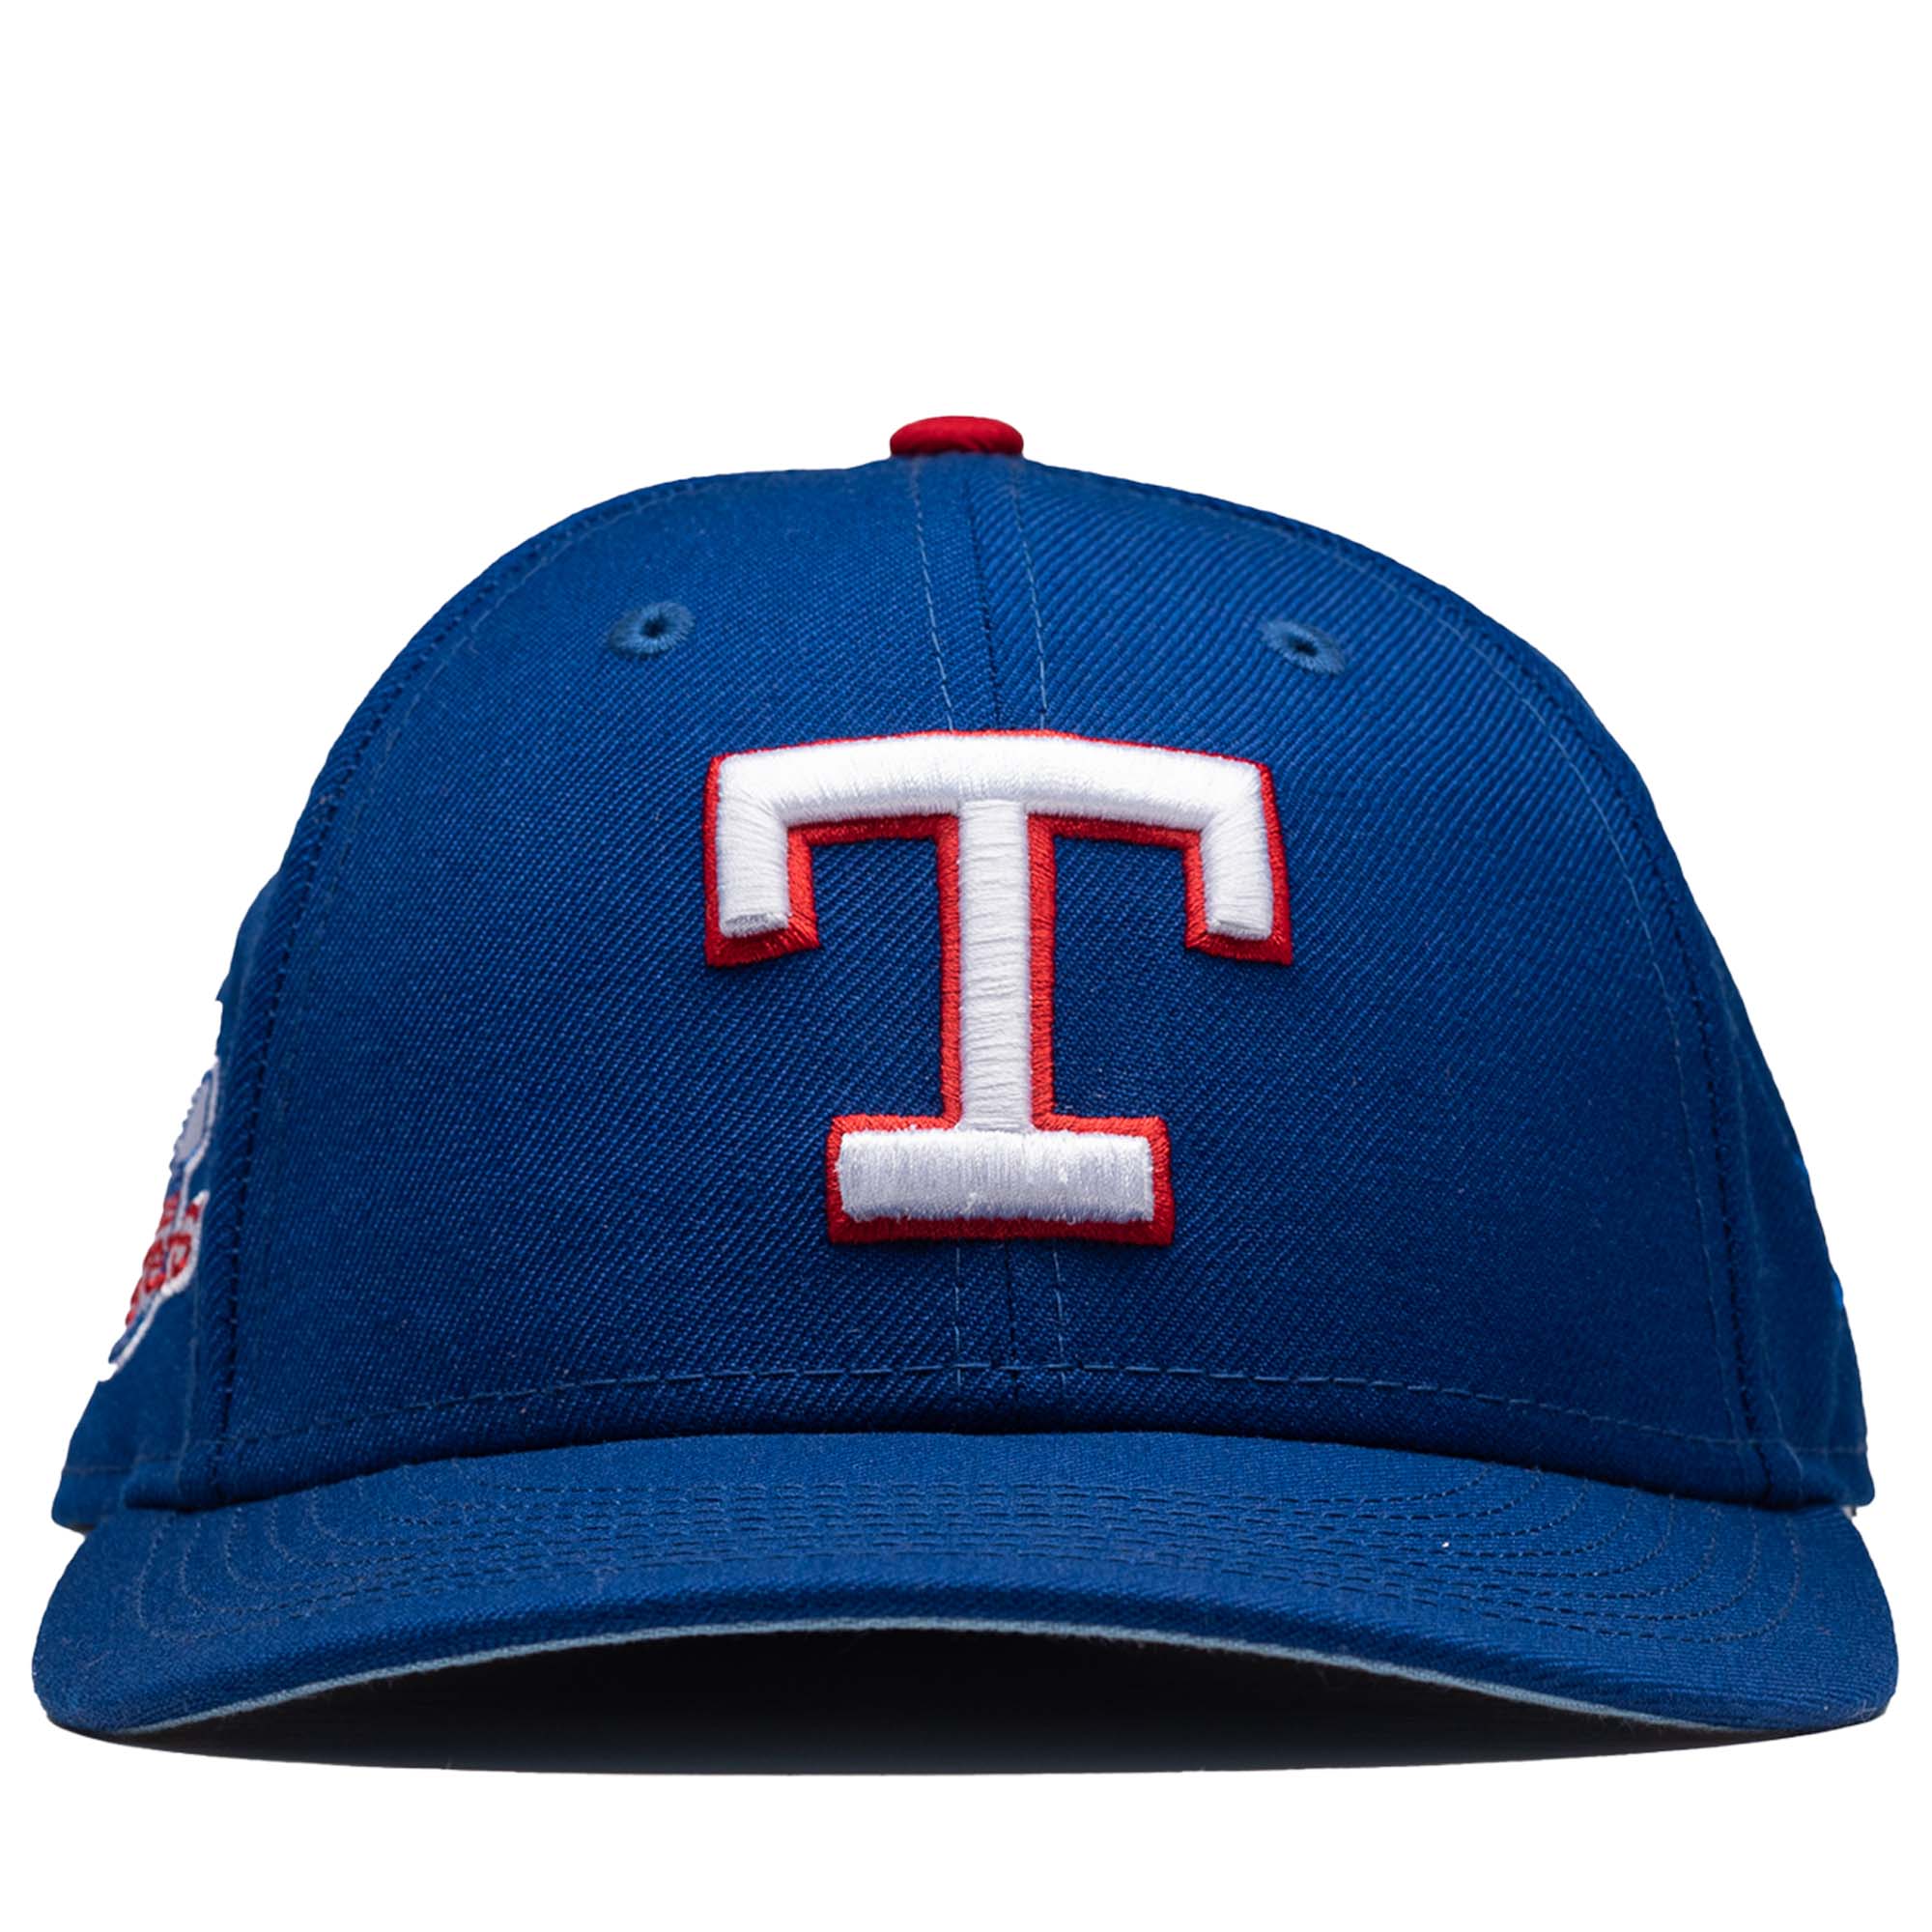 Vintage Texas Rangers Baseball FINA sponsored Hat Cap Tan Khaki